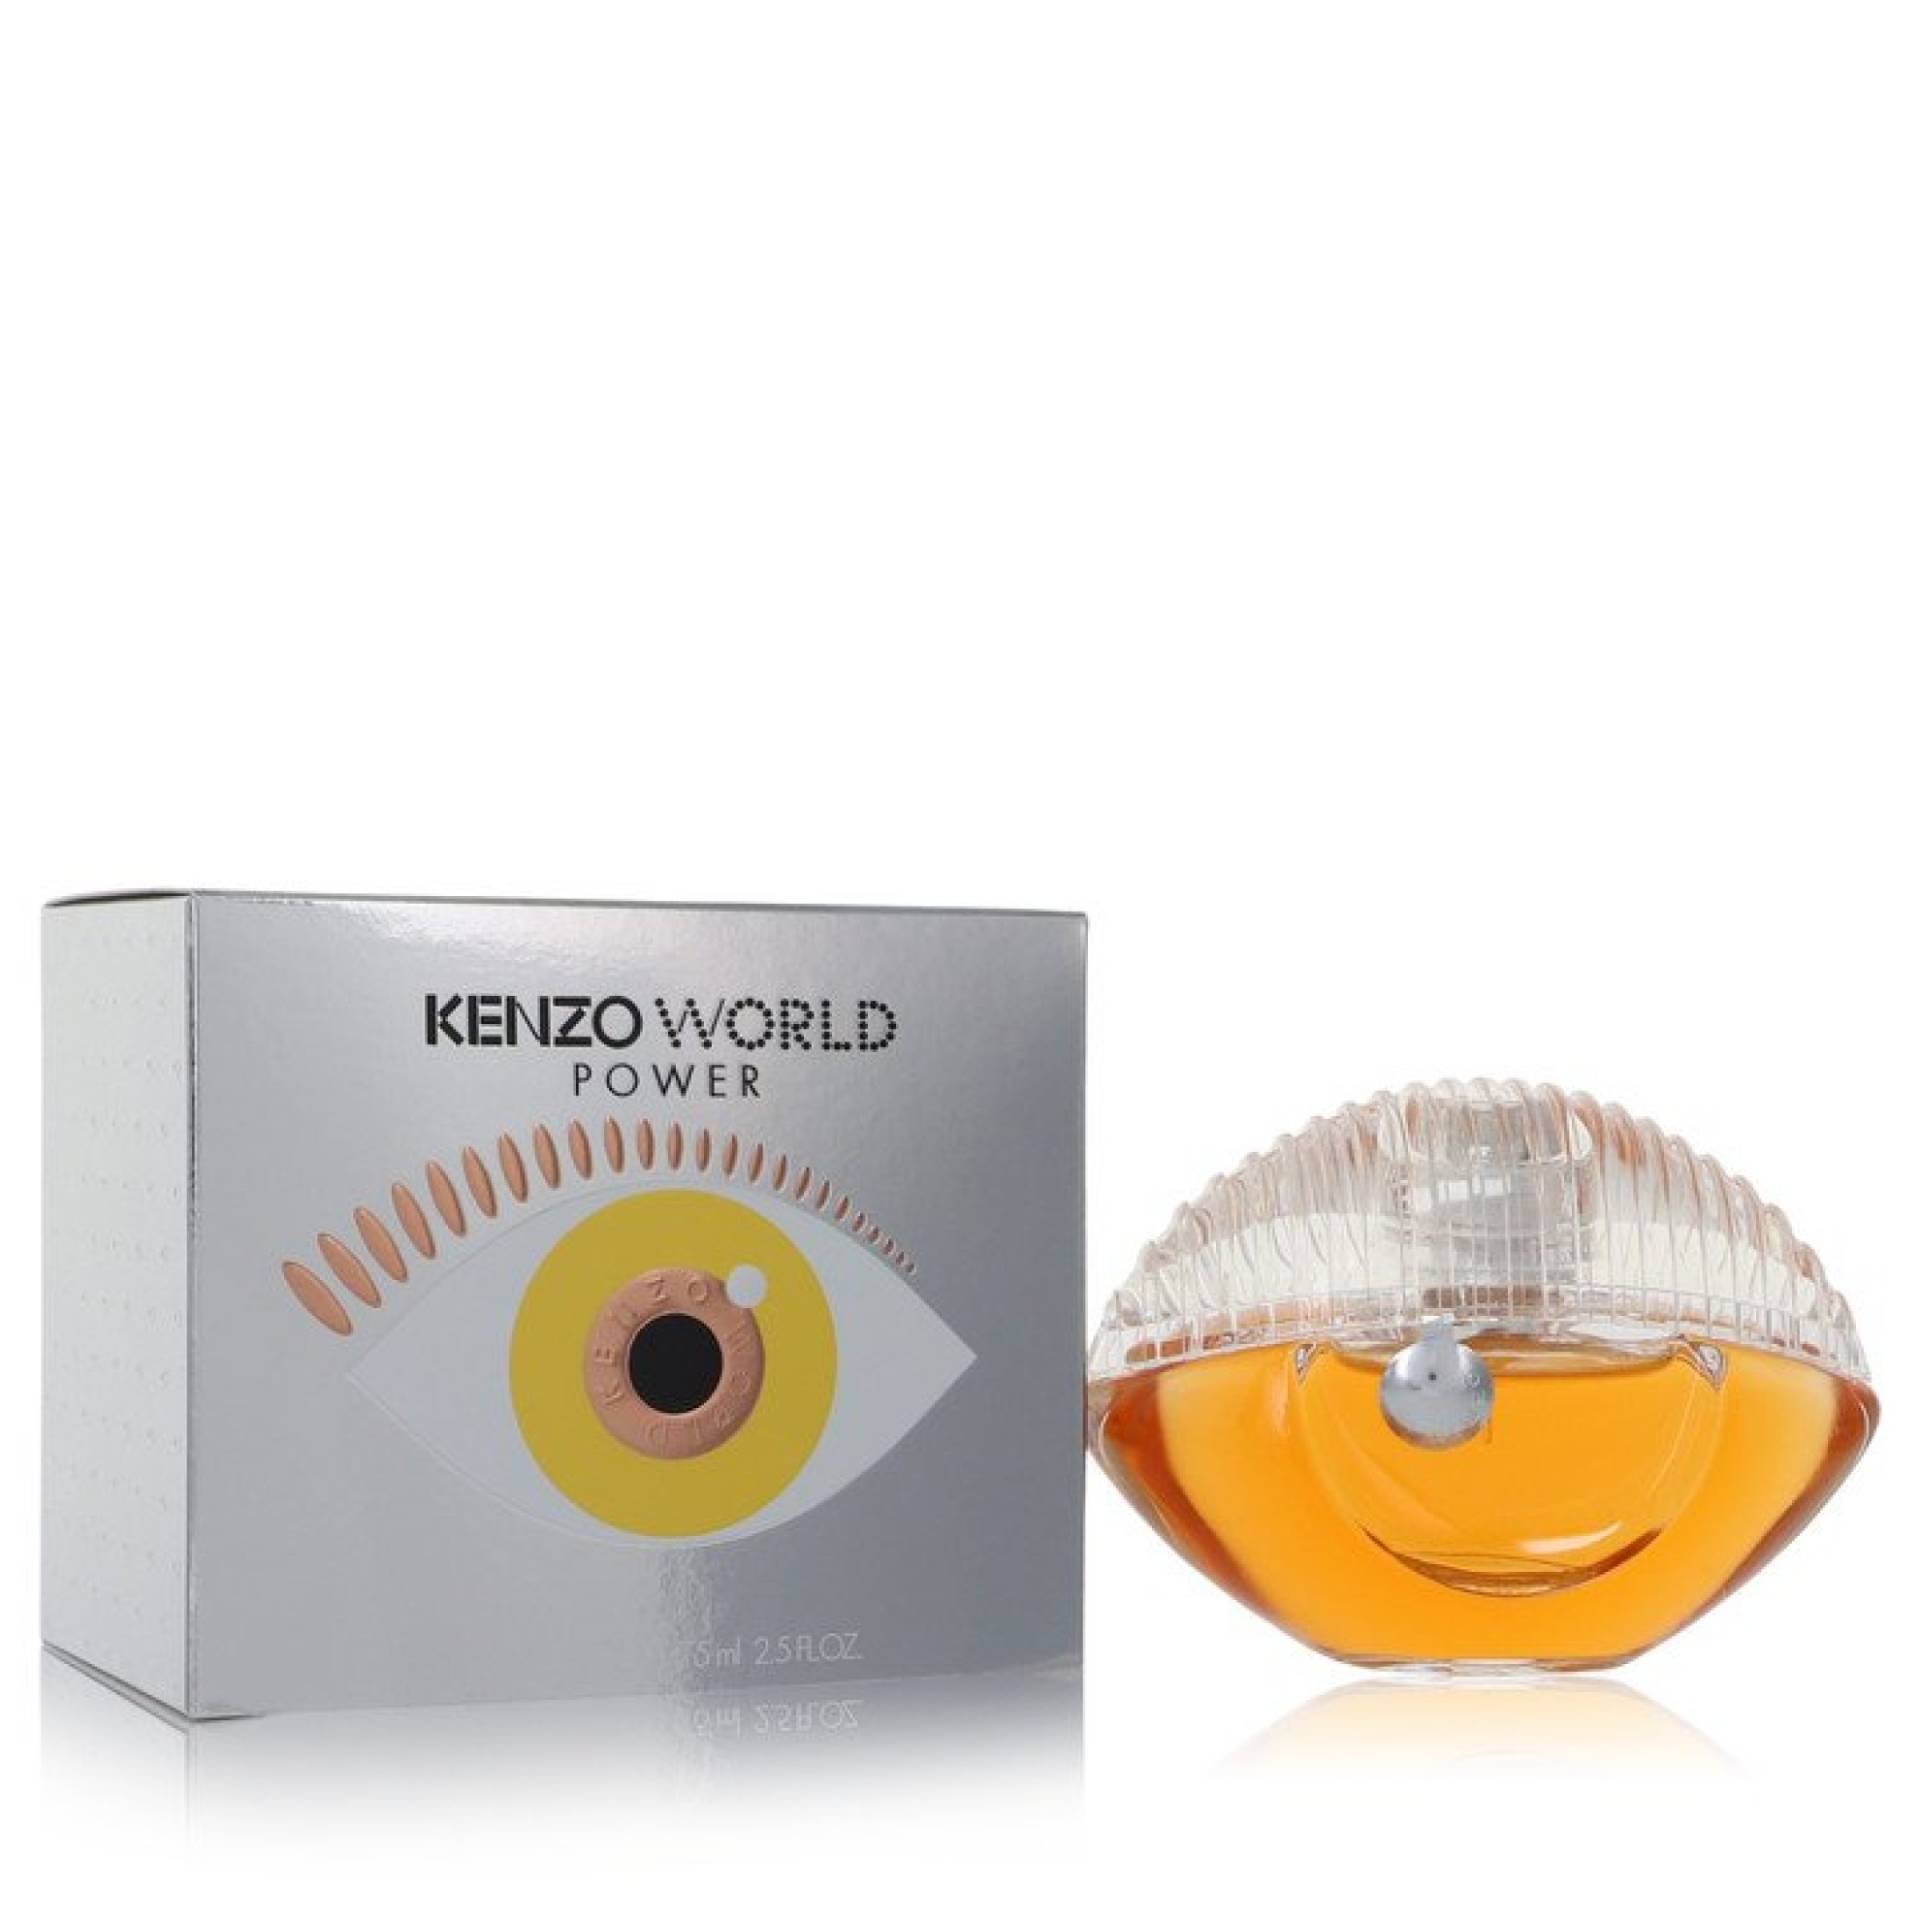 Kenzo World Power Eau De Parfum Spray 75 ml von Kenzo